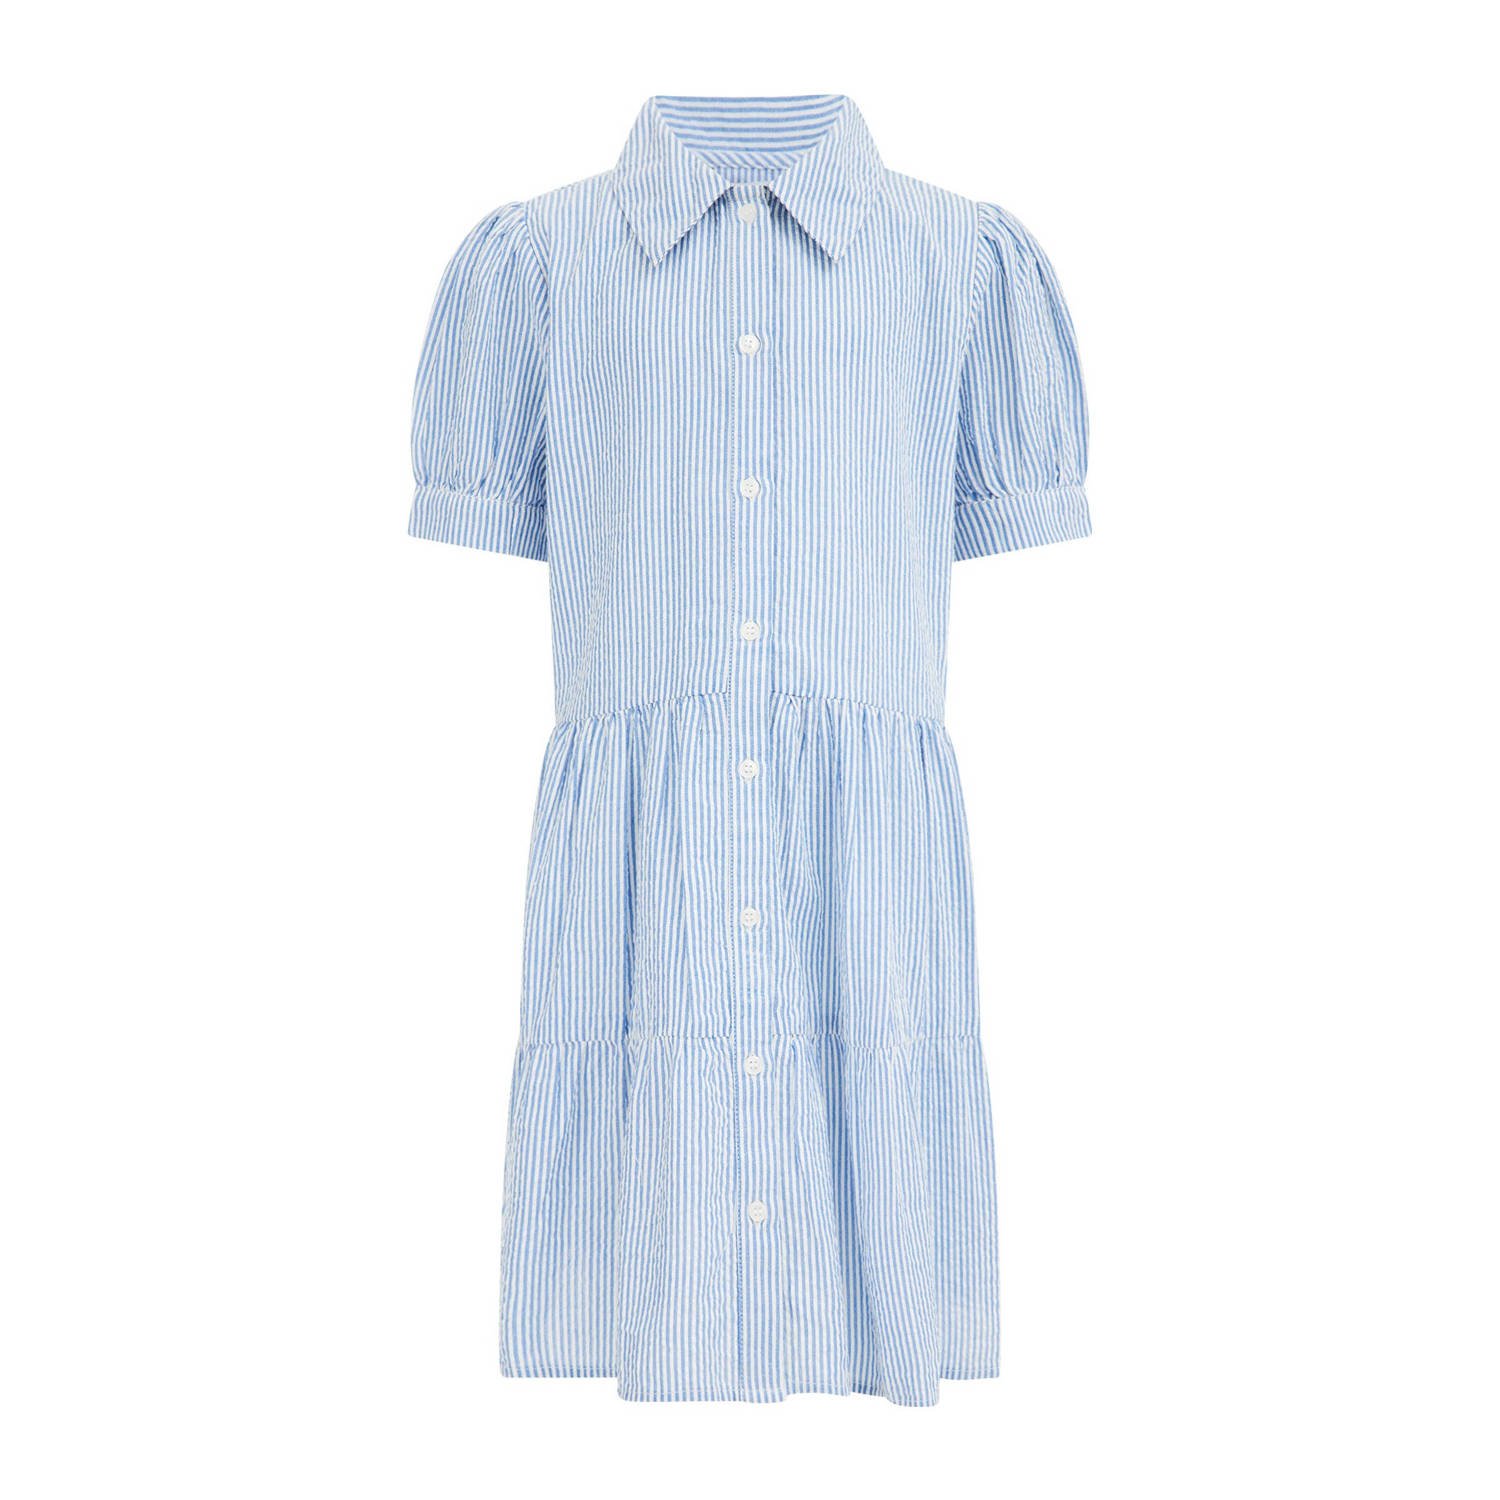 WE Fashion gestreepte jurk blauw wit Meisjes Katoen Klassieke kraag Streep 110 116